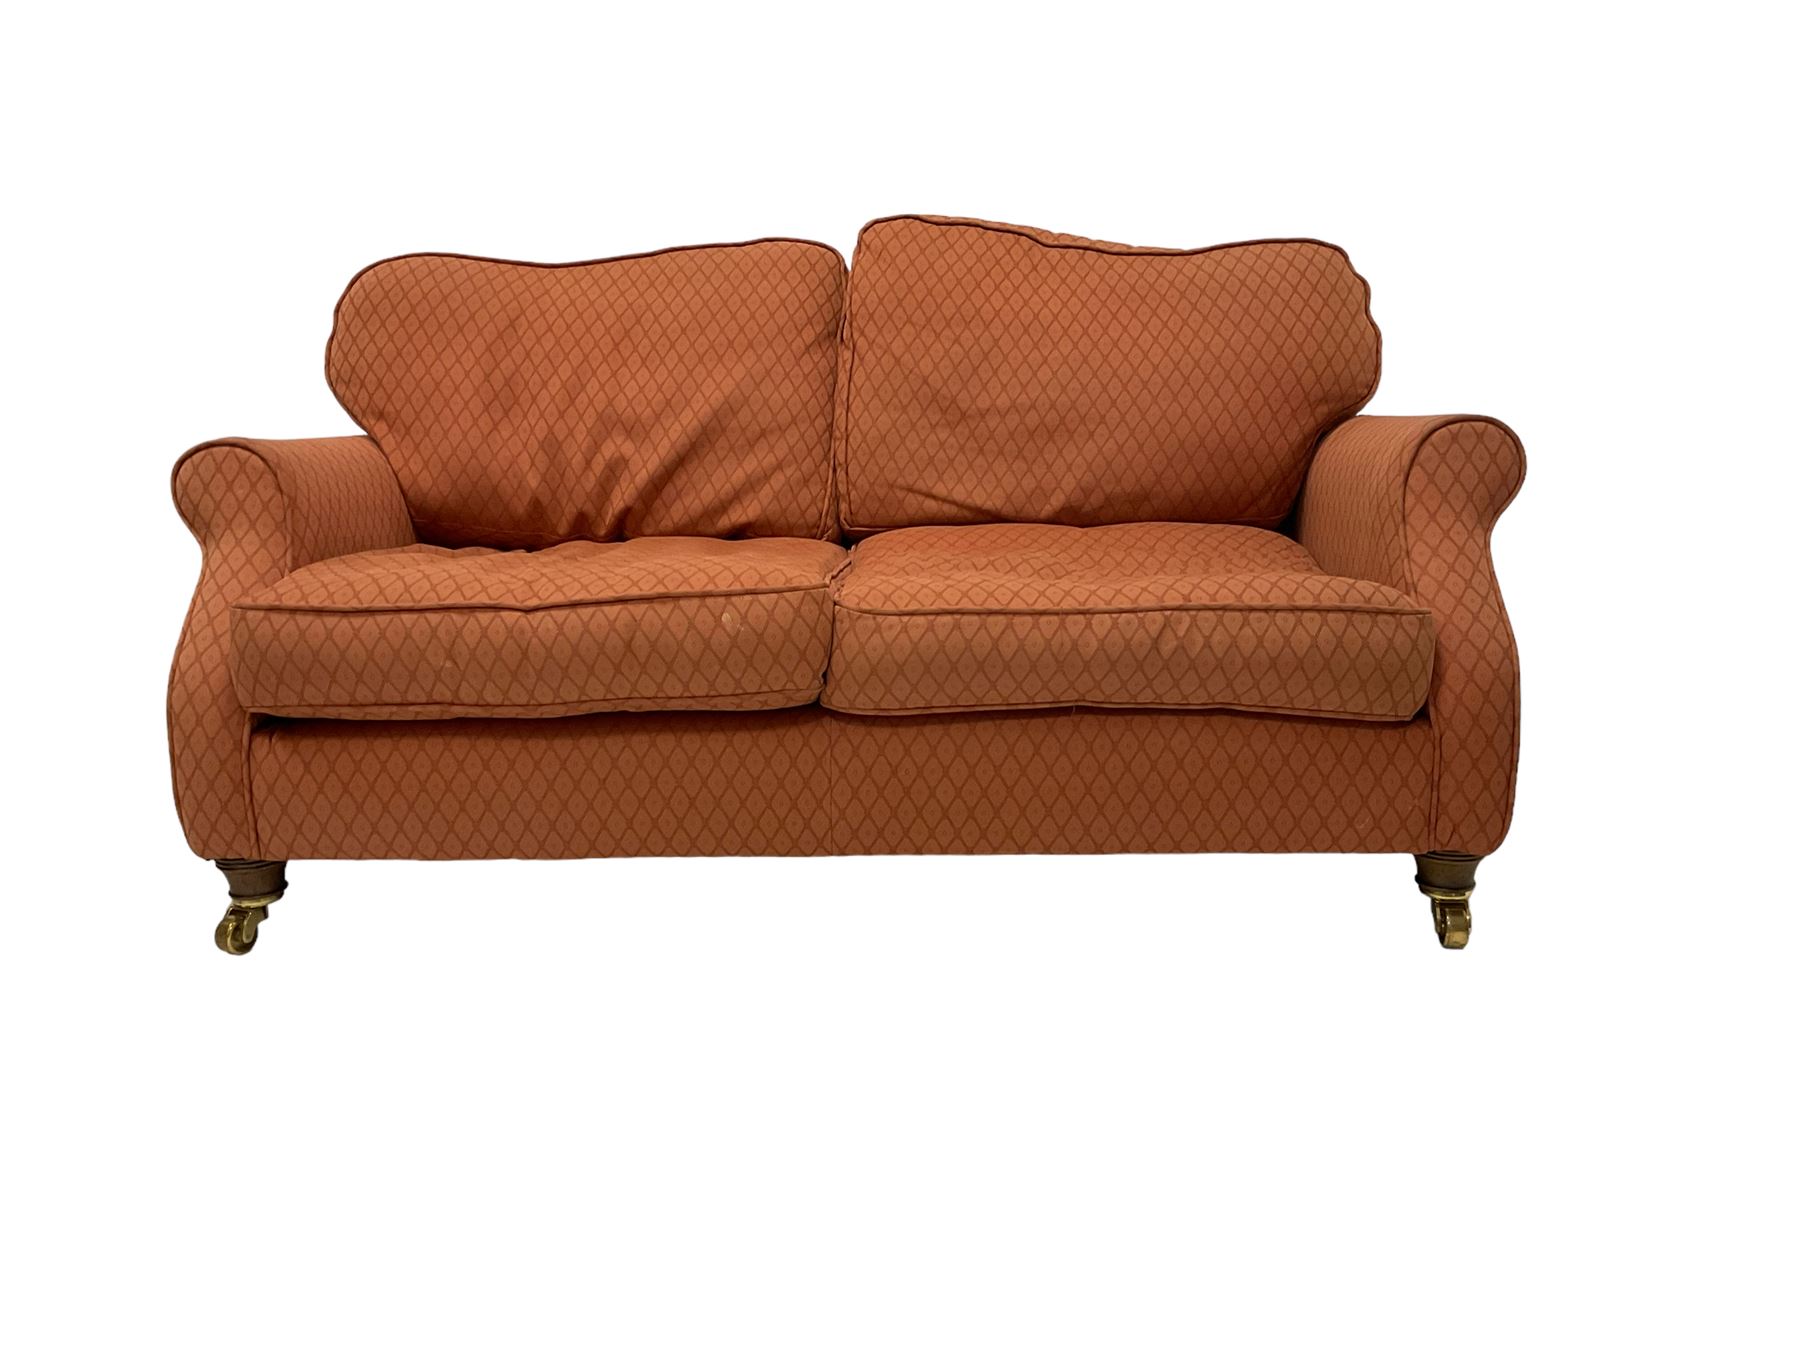 Traditional three seat sofa - Image 3 of 8